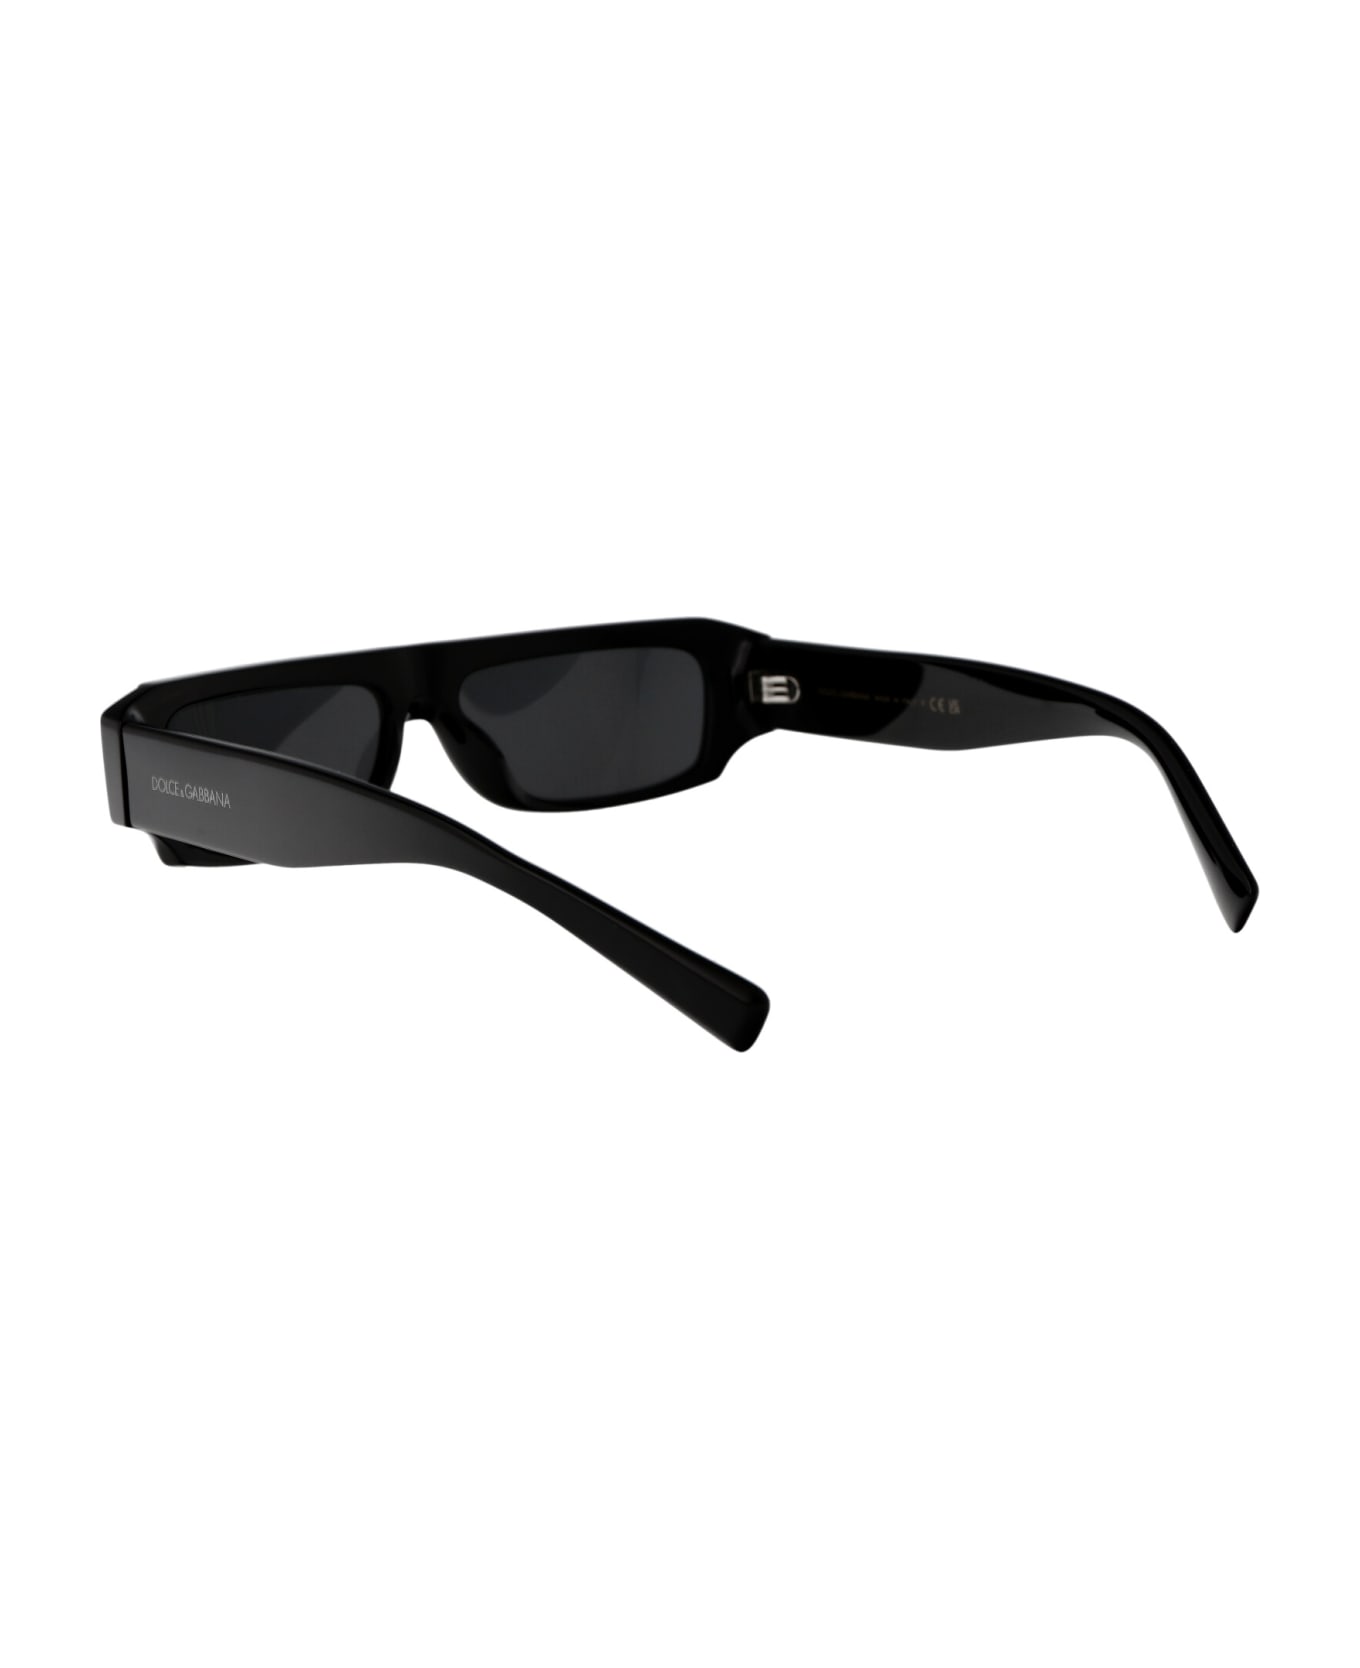 Dolce & Gabbana Eyewear 0dg4458 Sunglasses - 501/87 BLACK